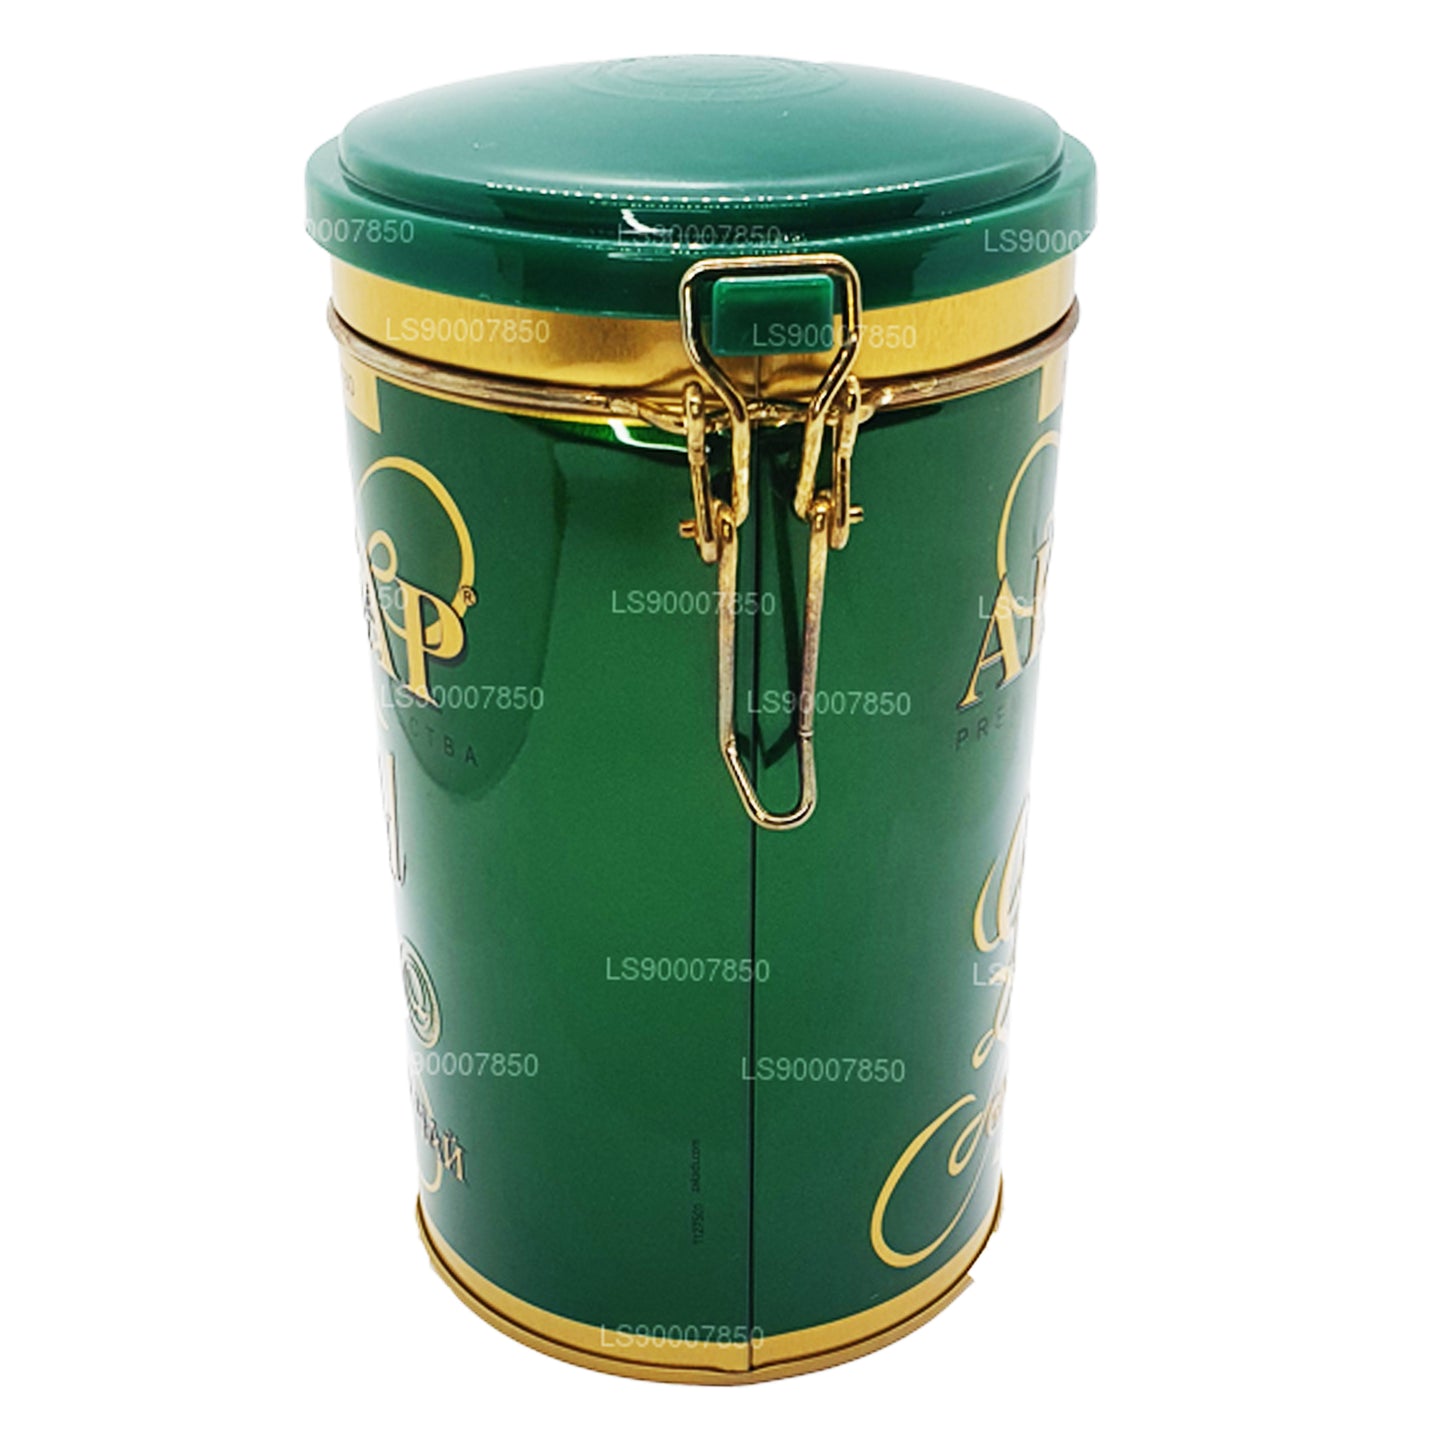 Akbar Gold Green Tea Leaf Tea (275g) Tin